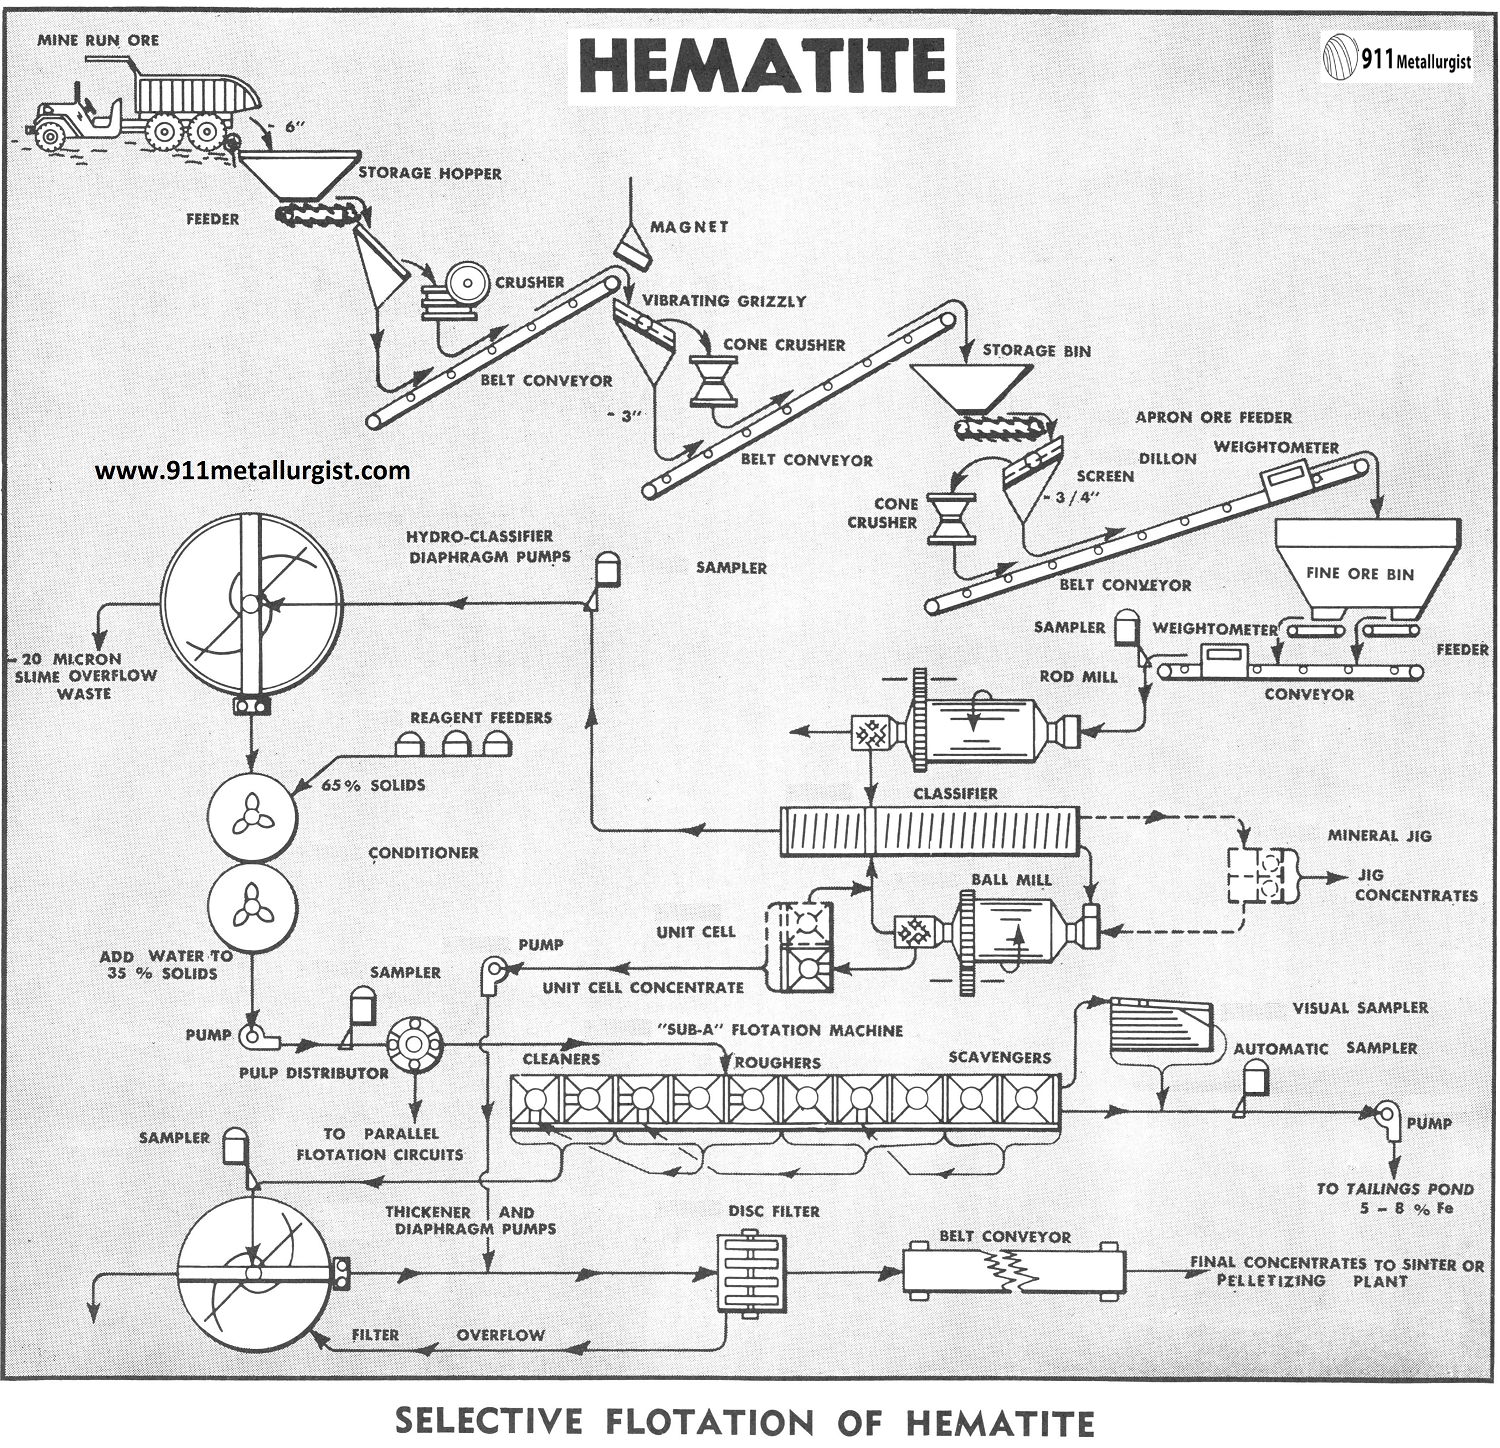 Selective Flotation of Hematite